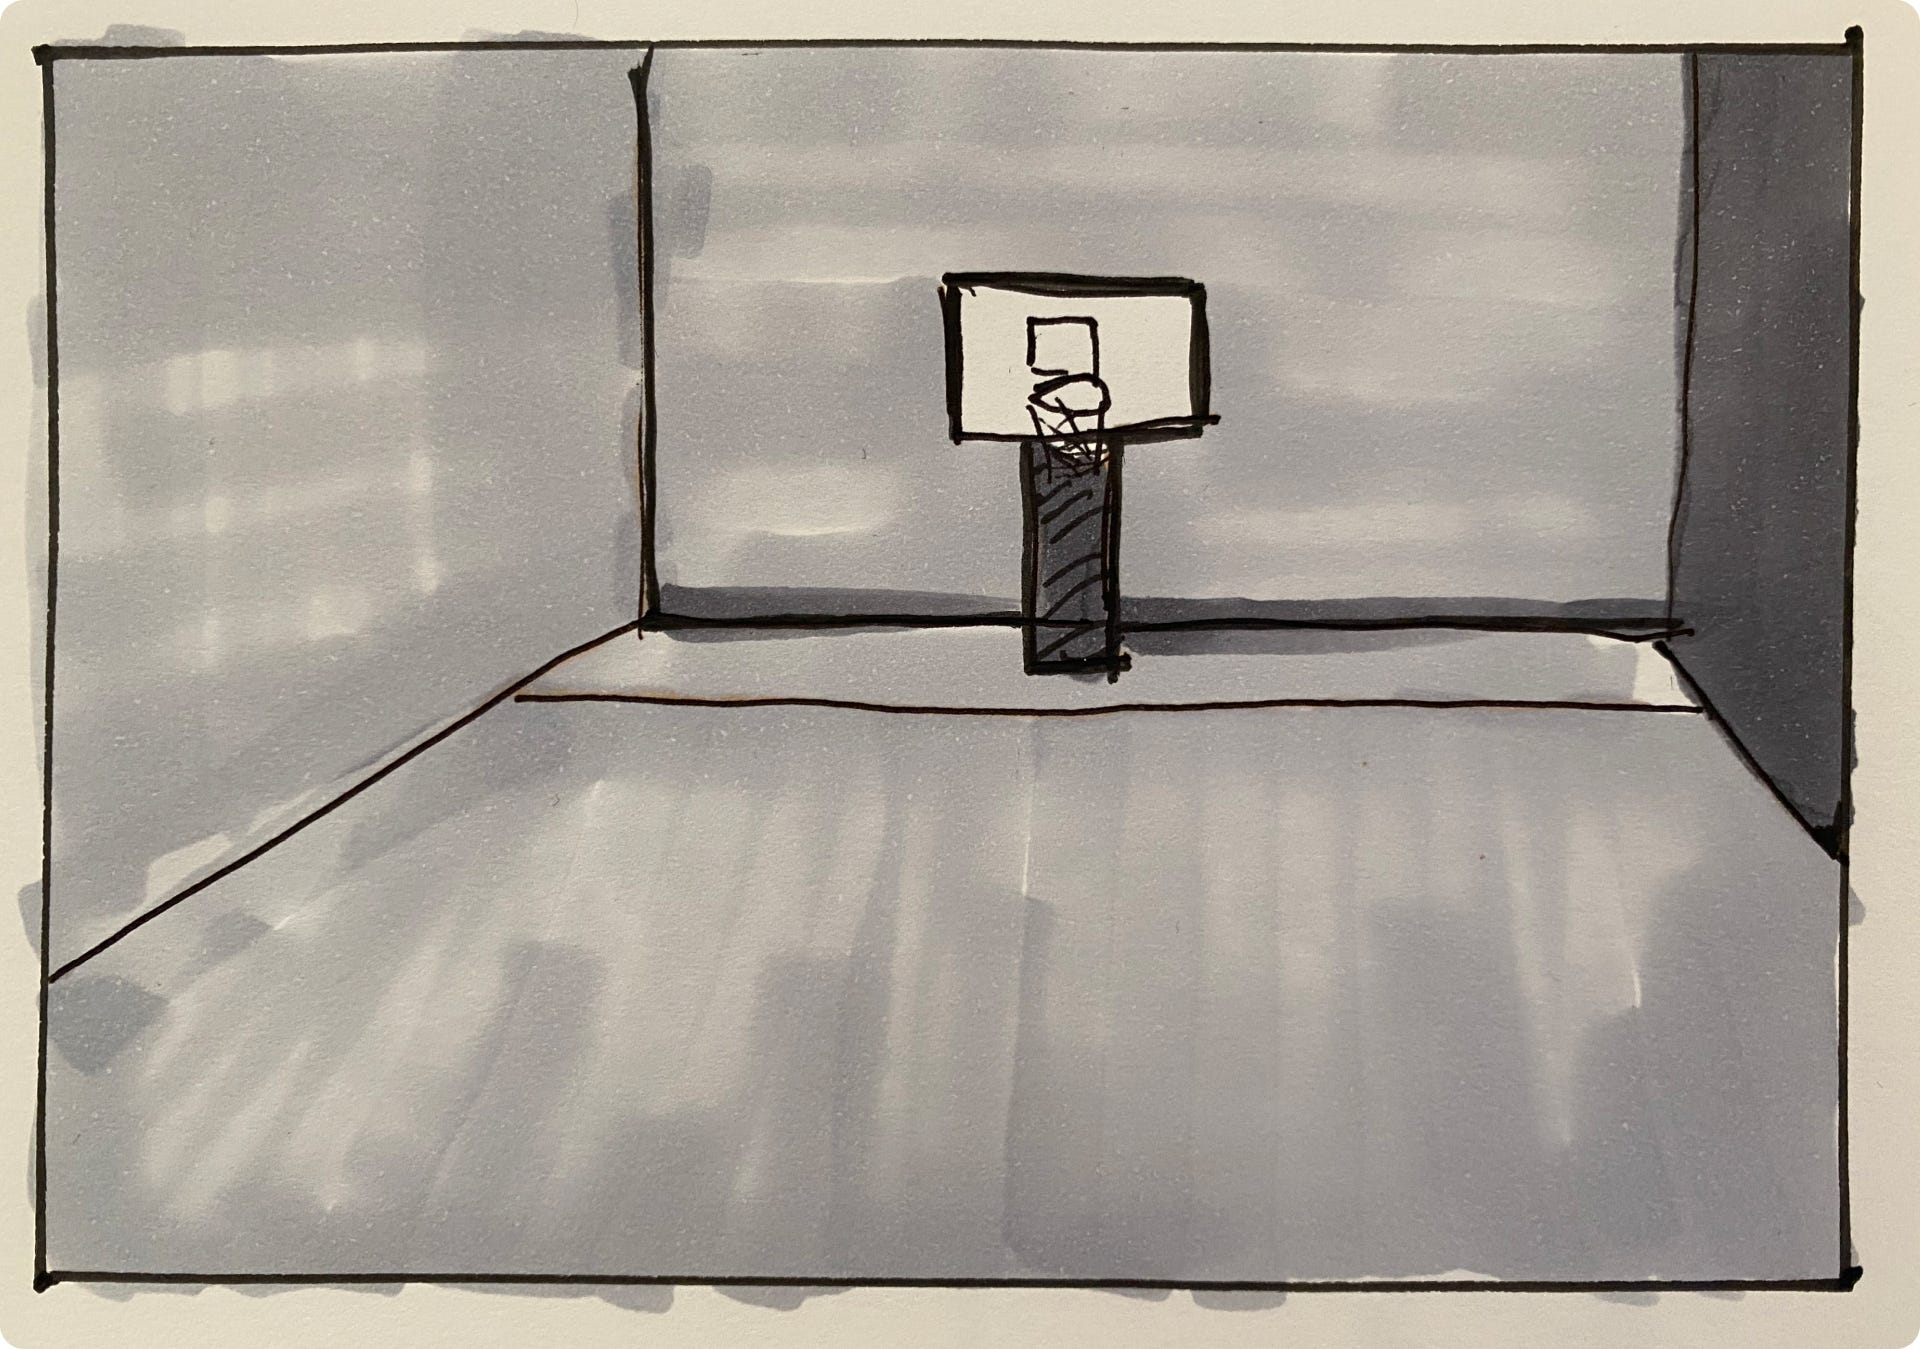 Sketch of empty basketball gym